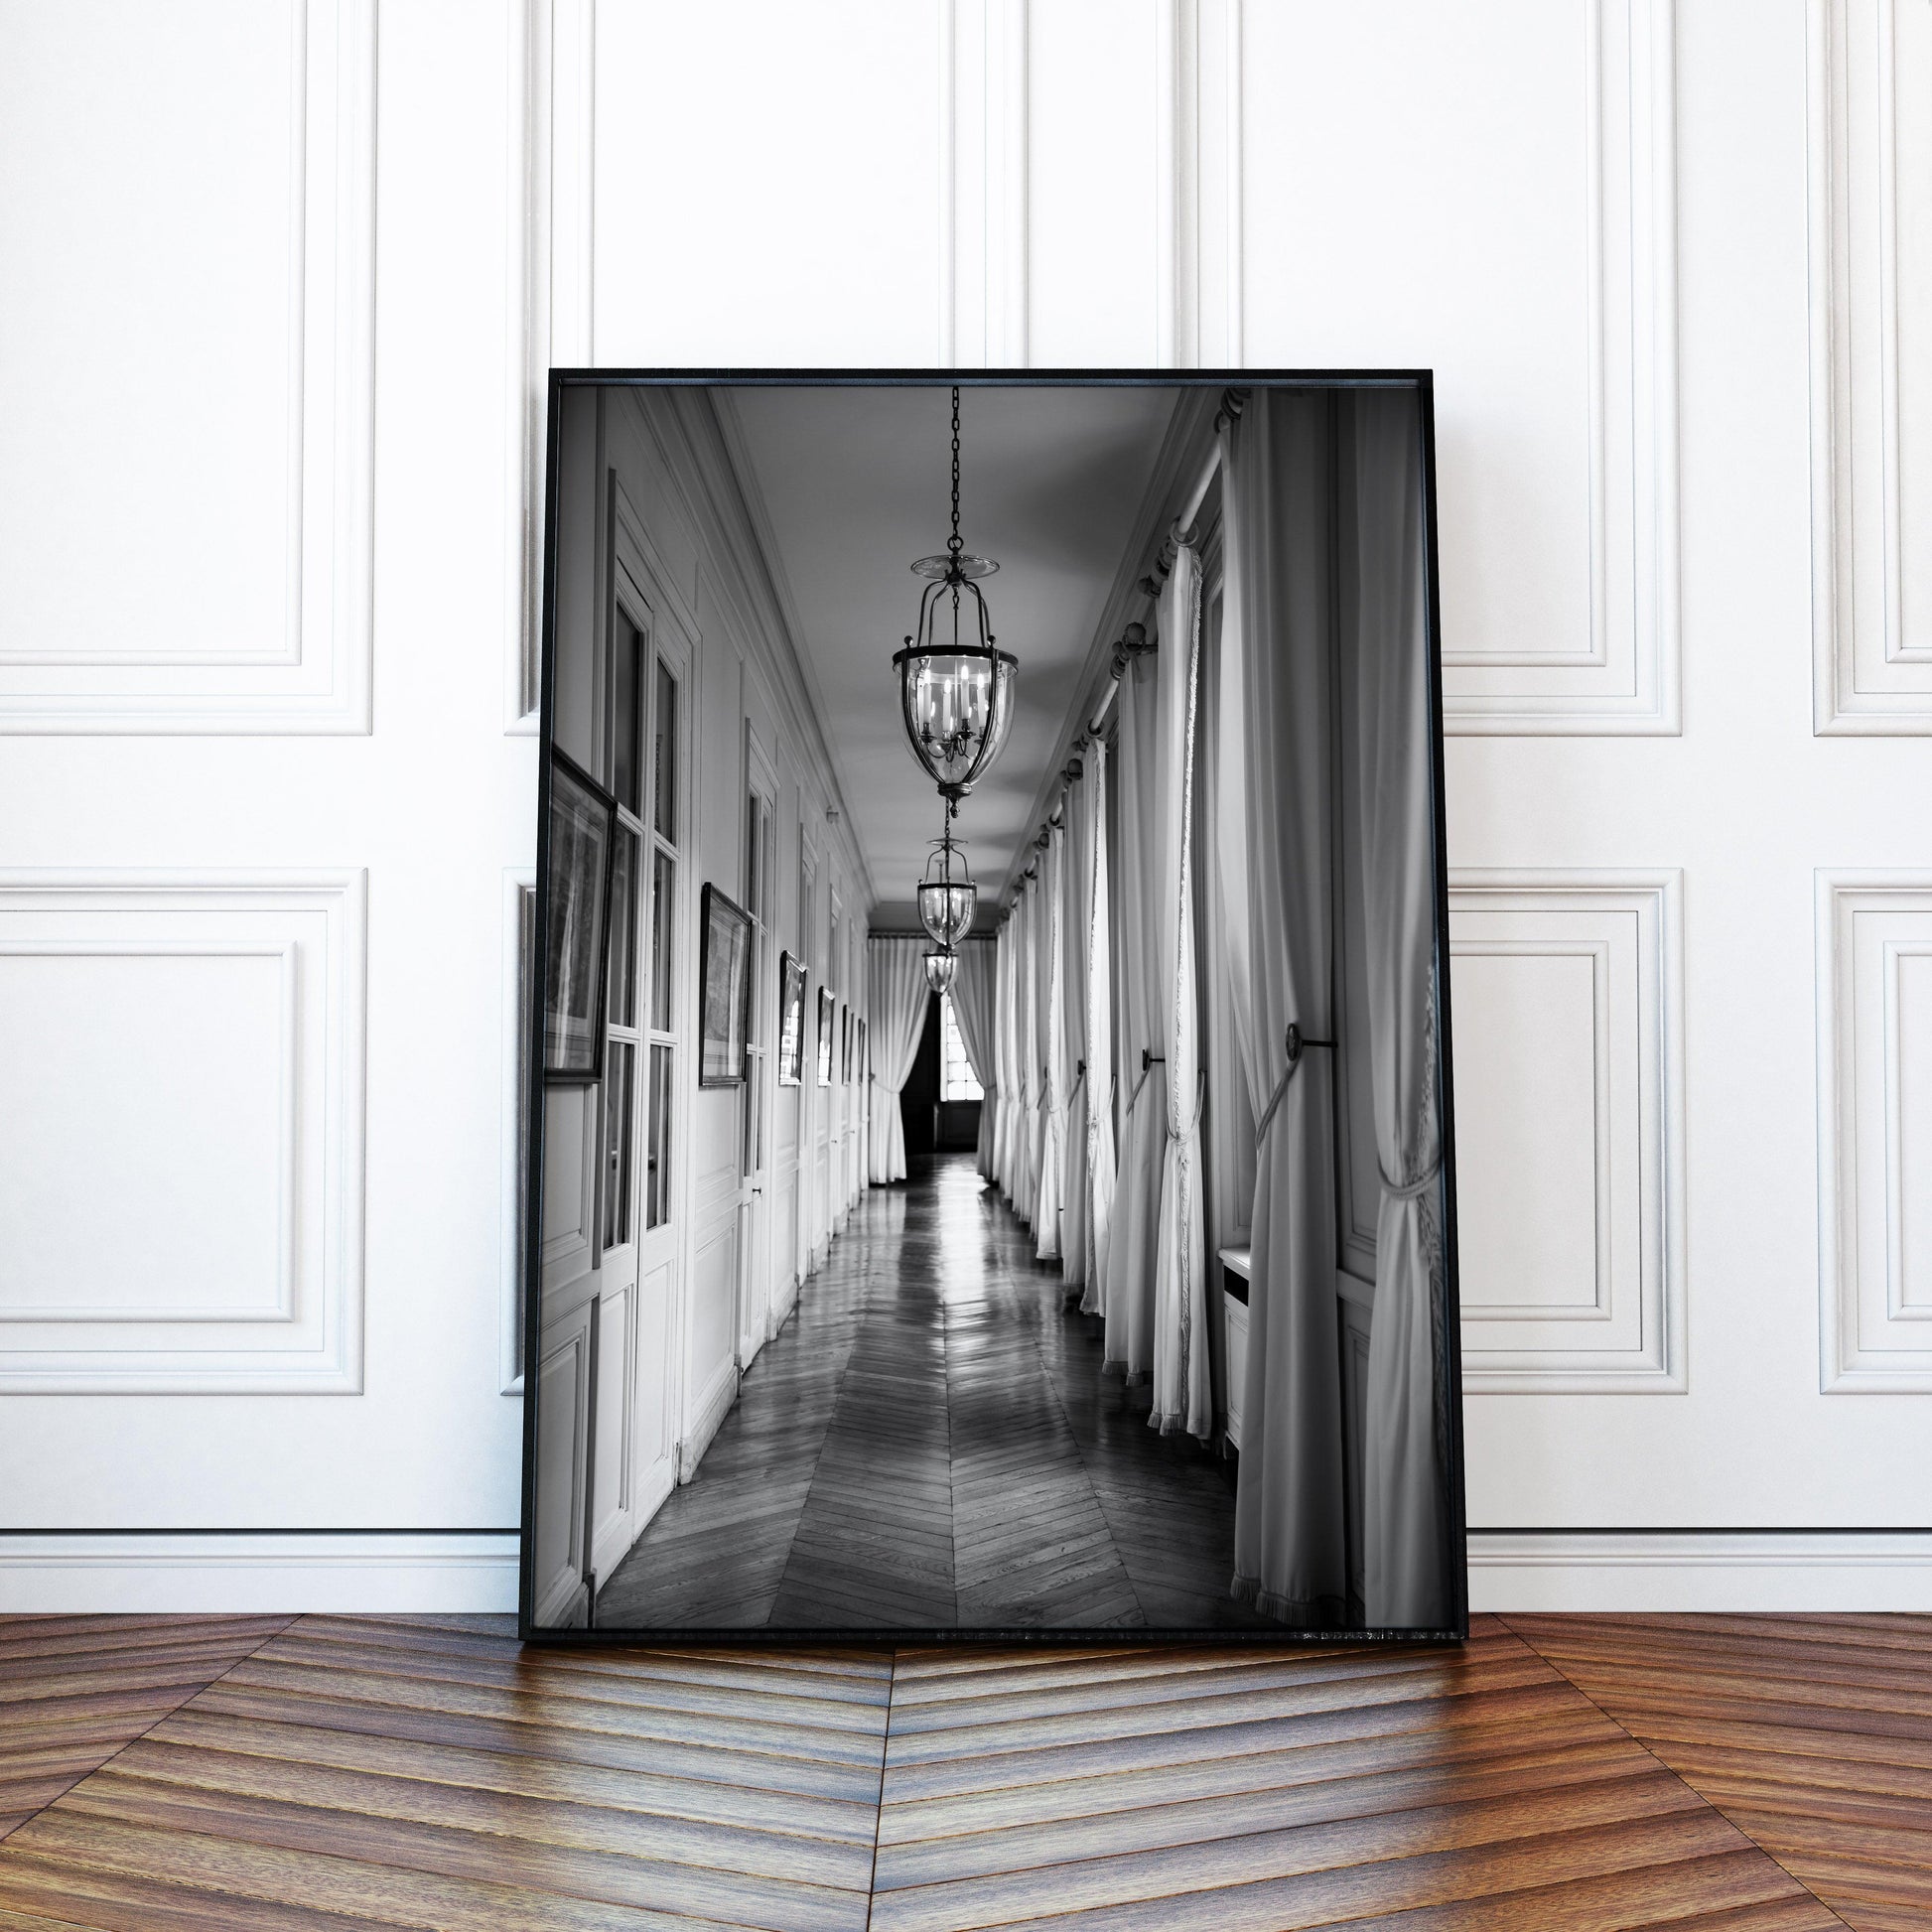 B&W Palace of Versailles Grand Trianon | Paris France Print - Departures Print Shop